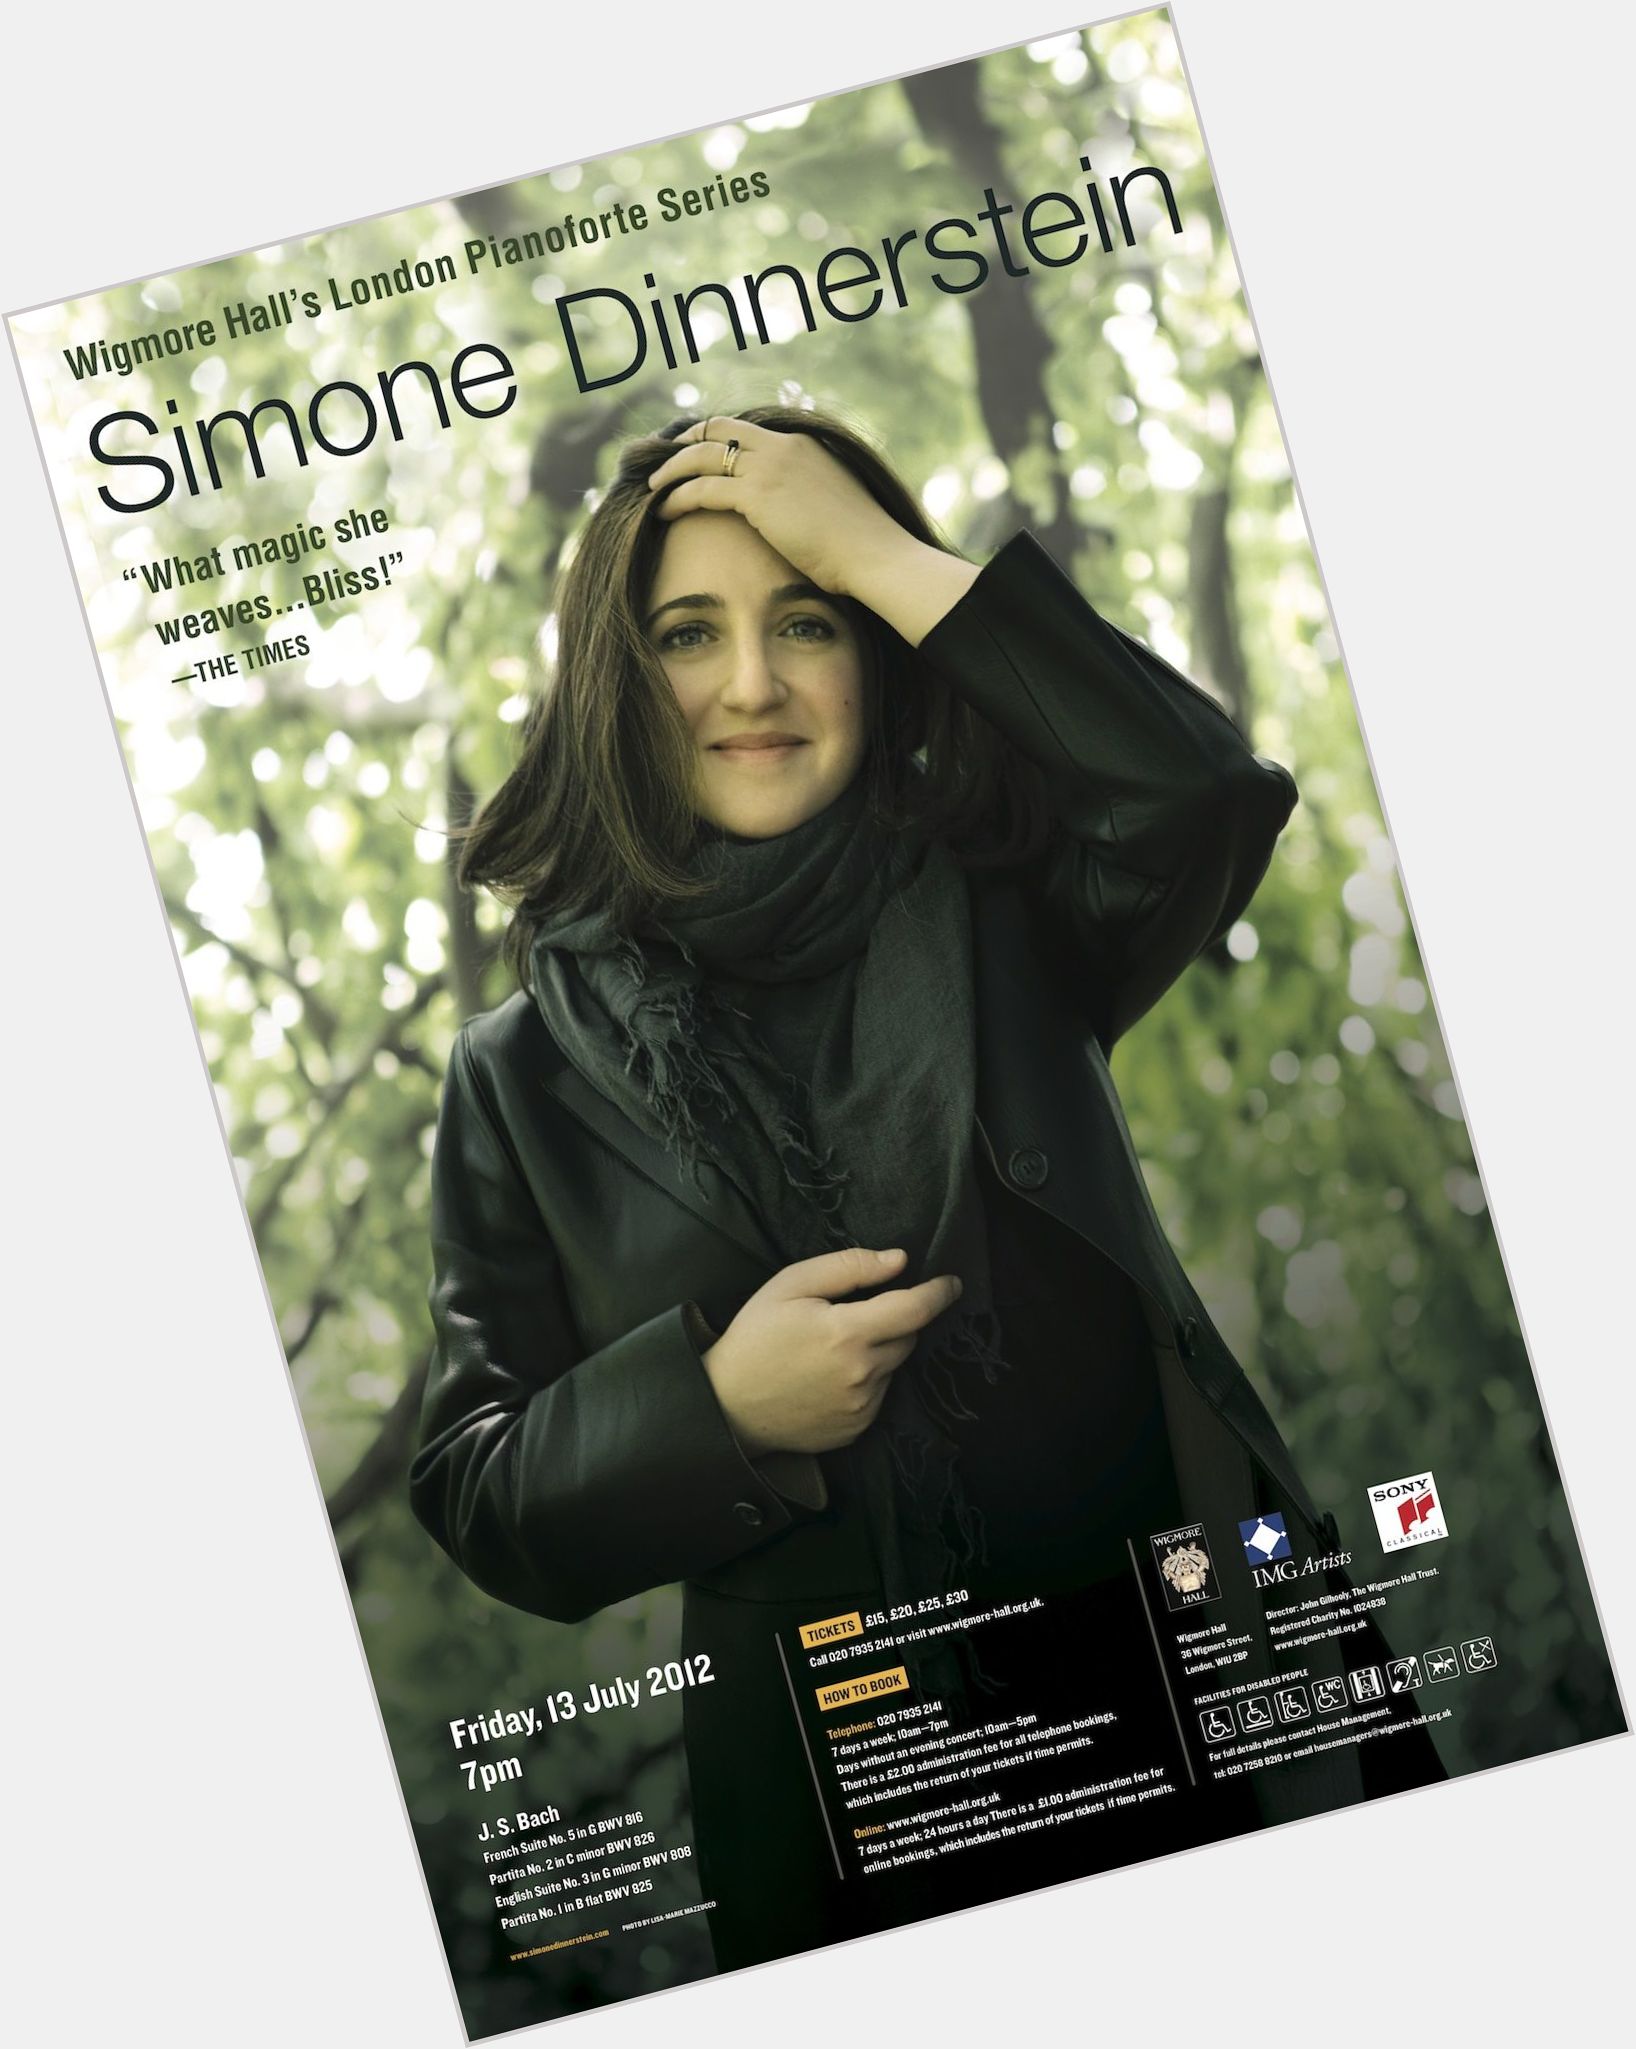 Http://fanpagepress.net/m/S/Simone Dinnerstein Full Body 6